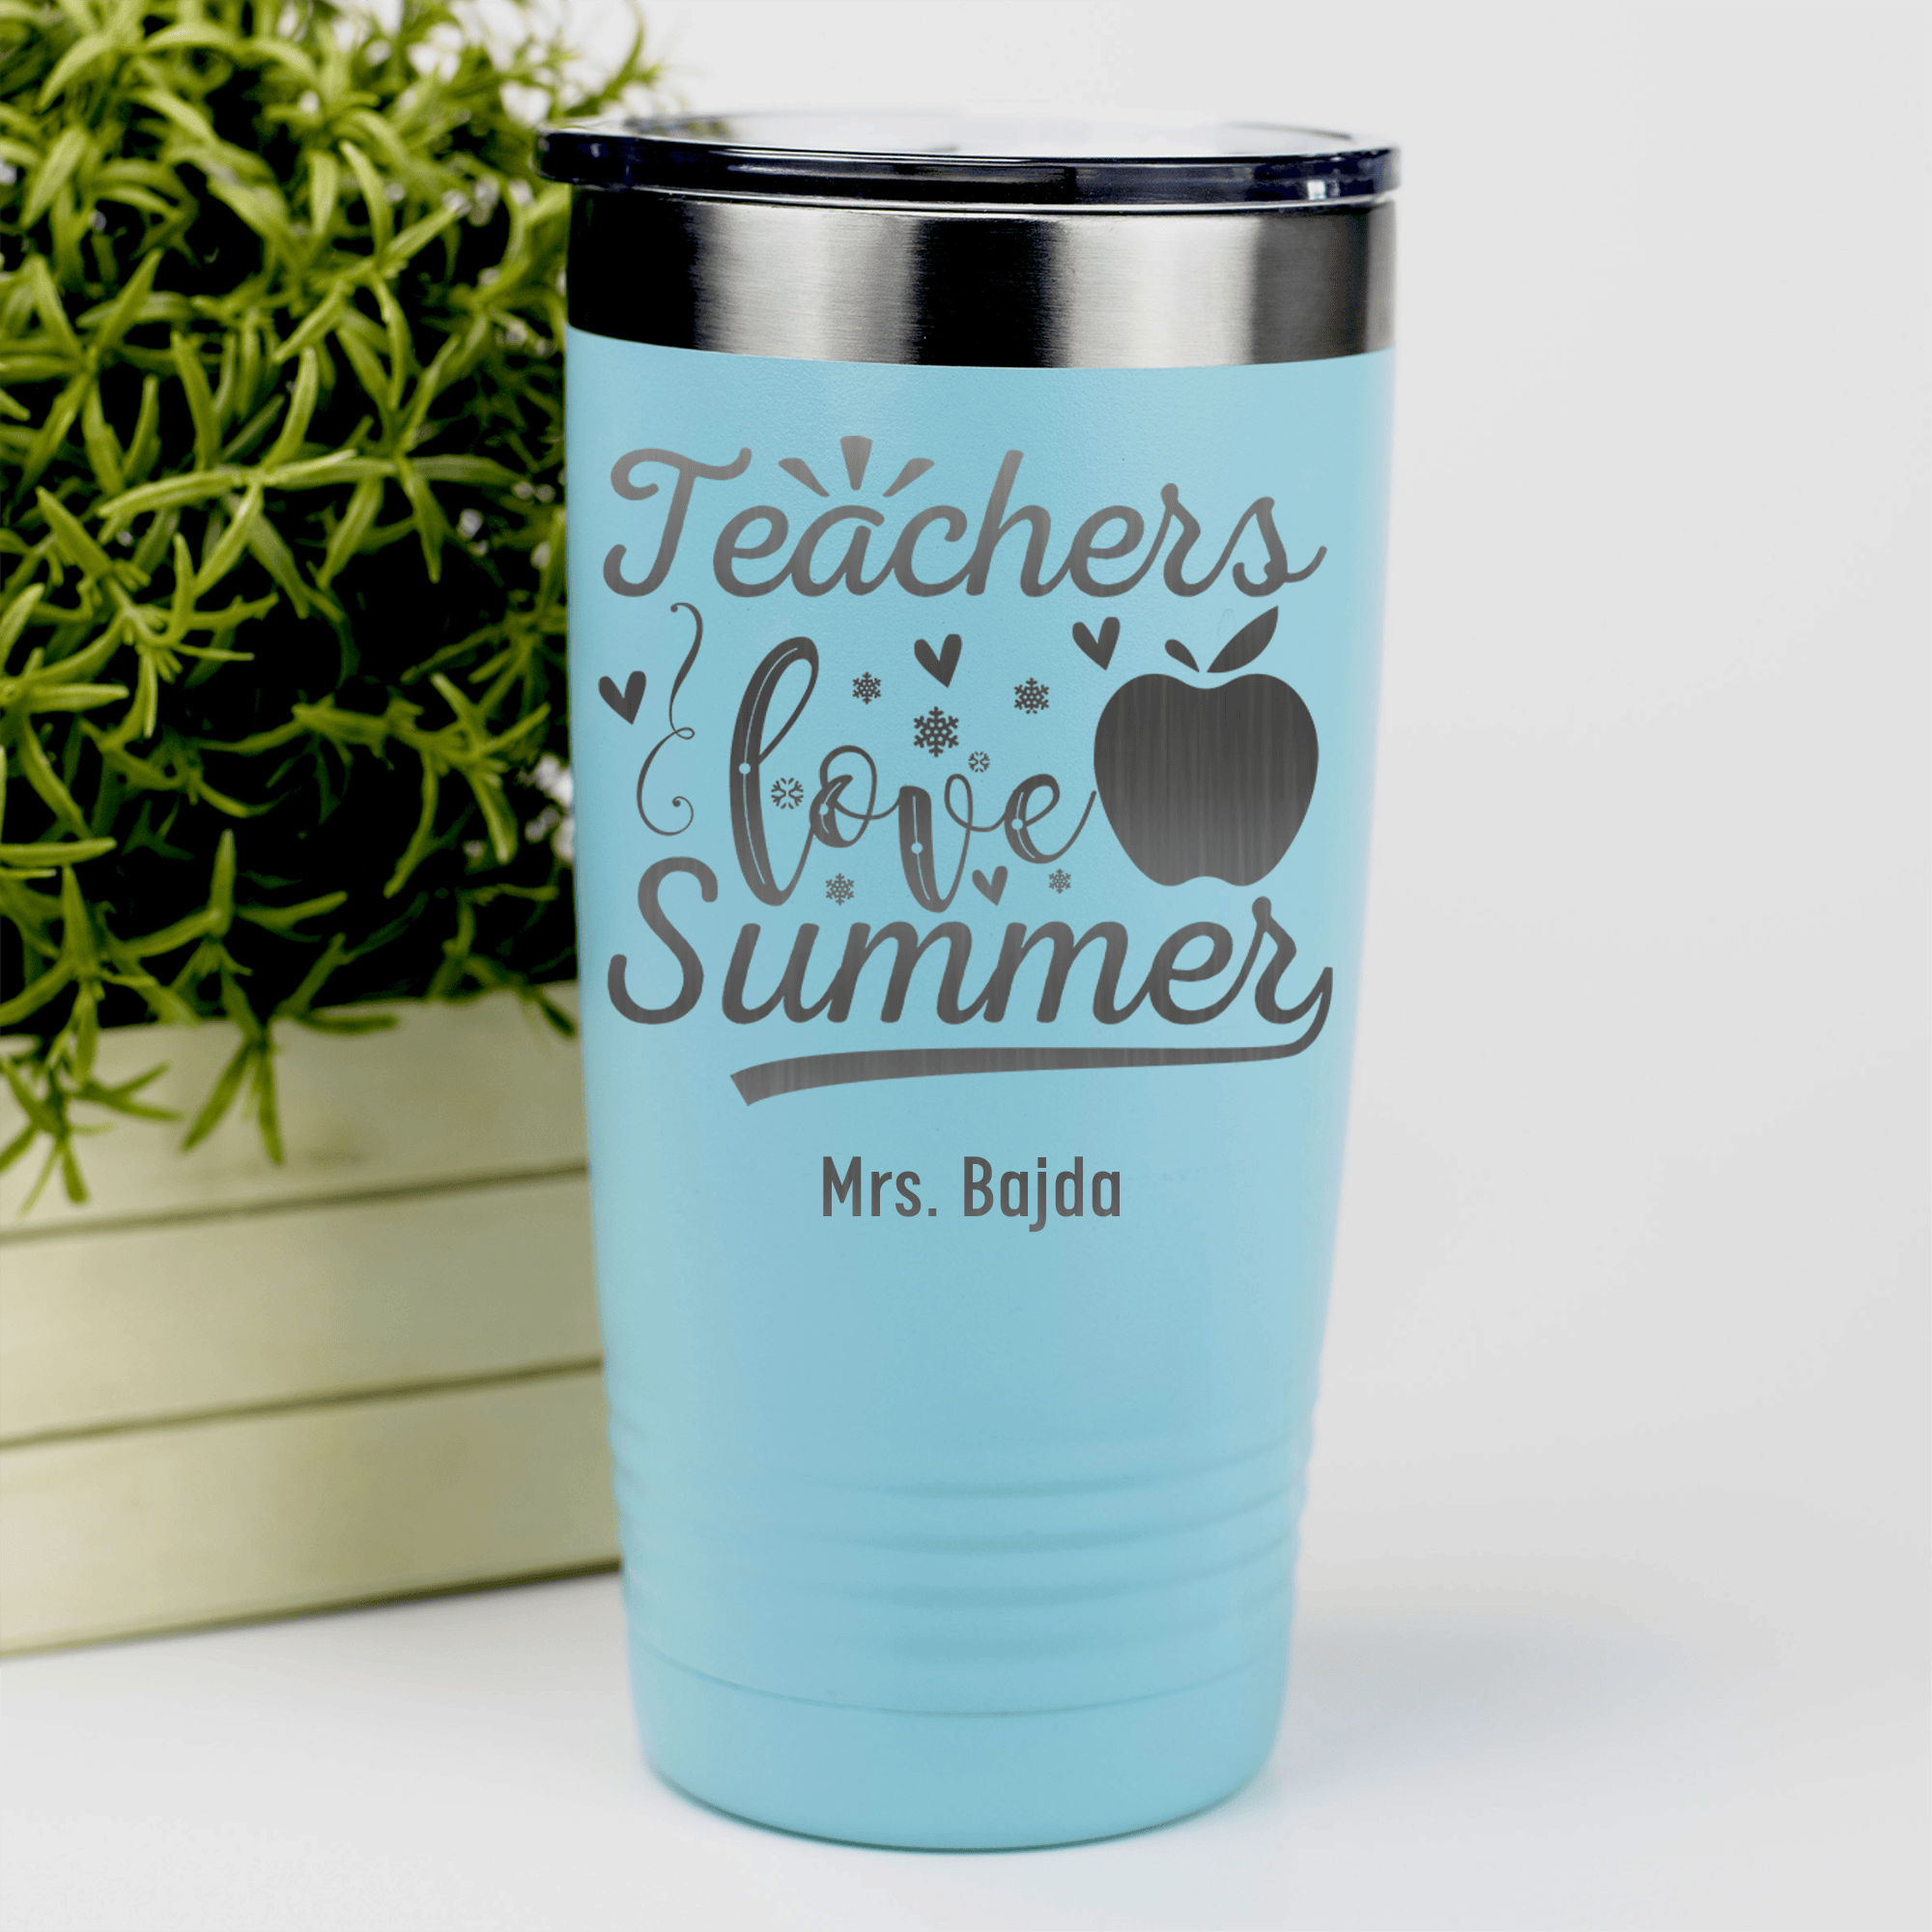 Teal Teacher Tumbler With Teachers Love Summer Design